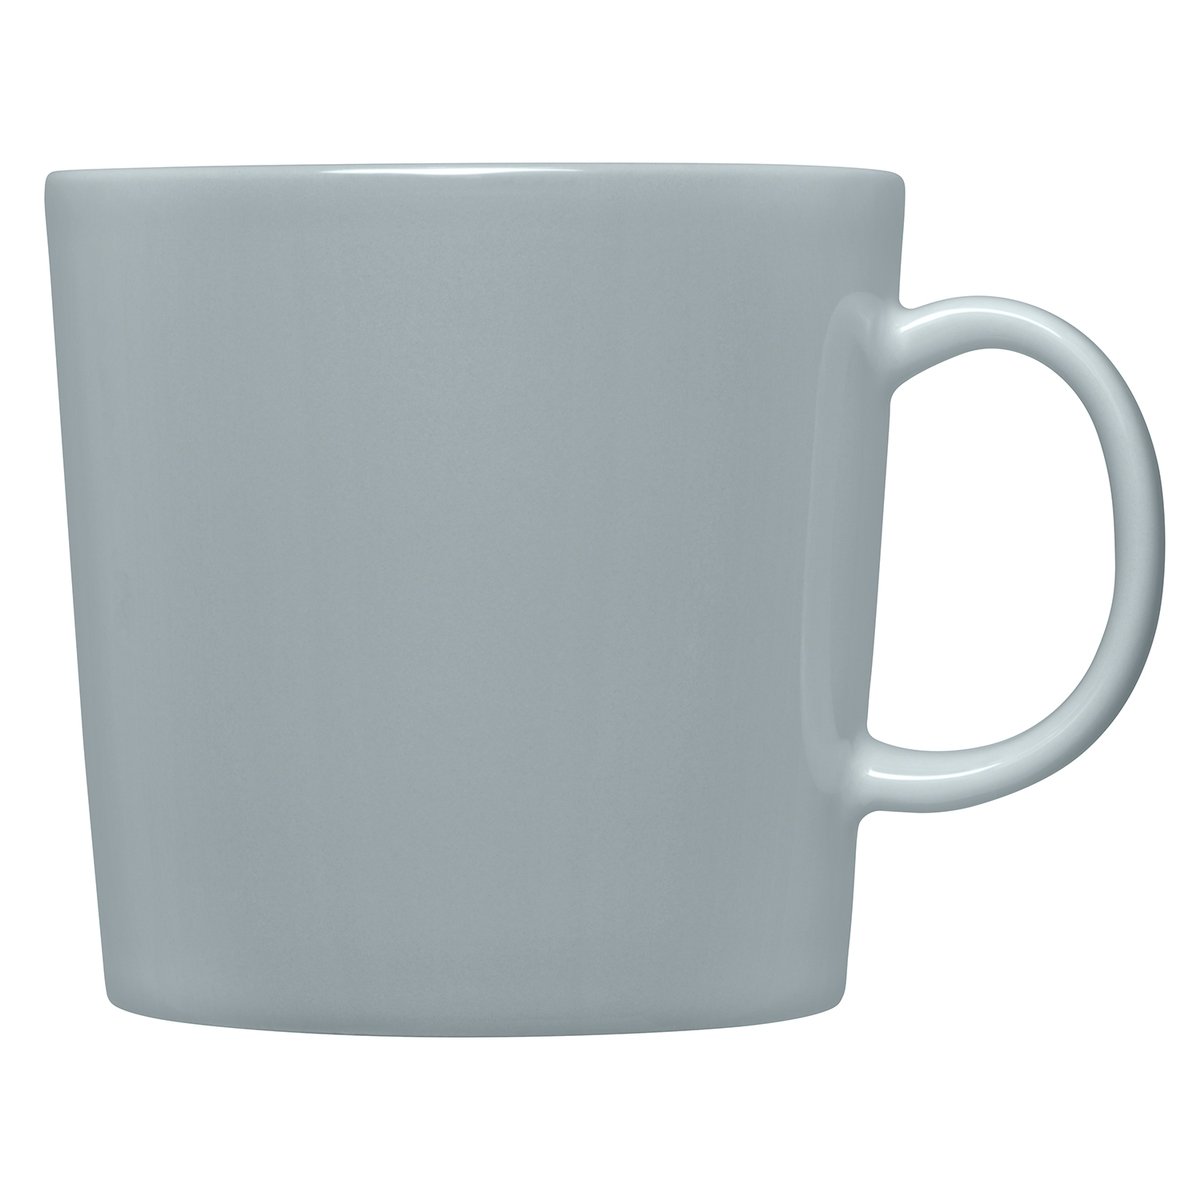 Iittala cups & mugs | For Nordic style | Finnish Design Shop